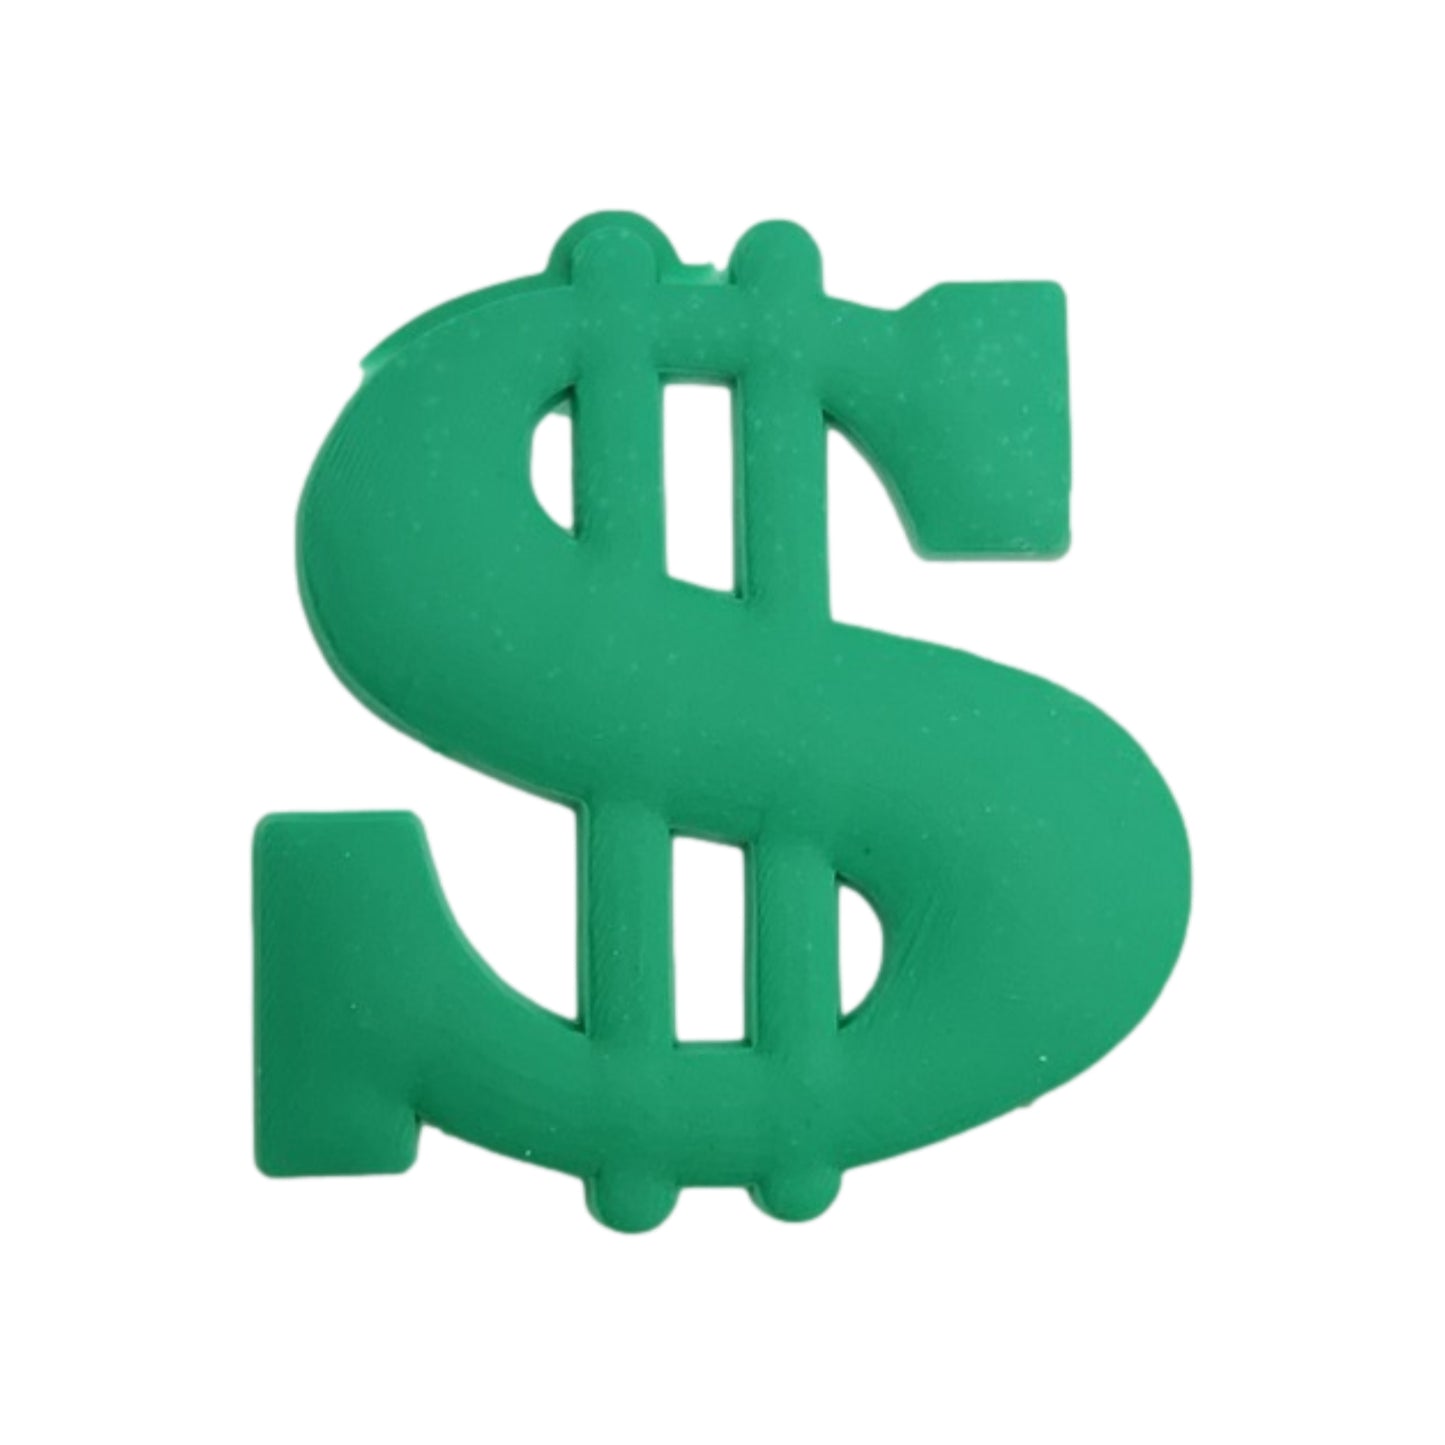 Dollar Sign Shoe Croc Charm - Homeware Discounts